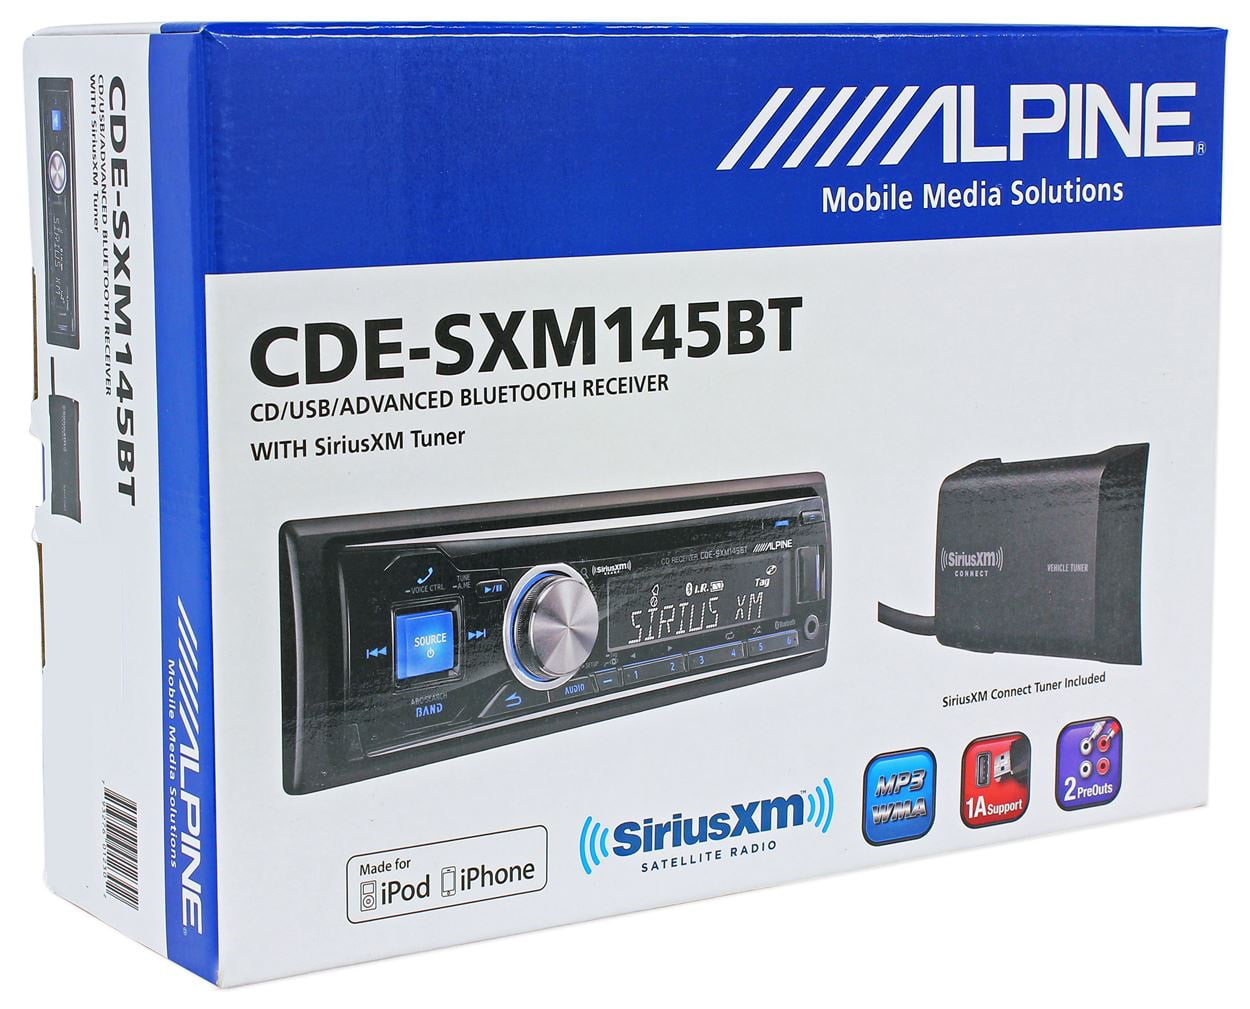 Alpine CDE-SXM145BT Car CD/MP3 Receiver With Bluetooth + SiriusXM Tuner  Included 